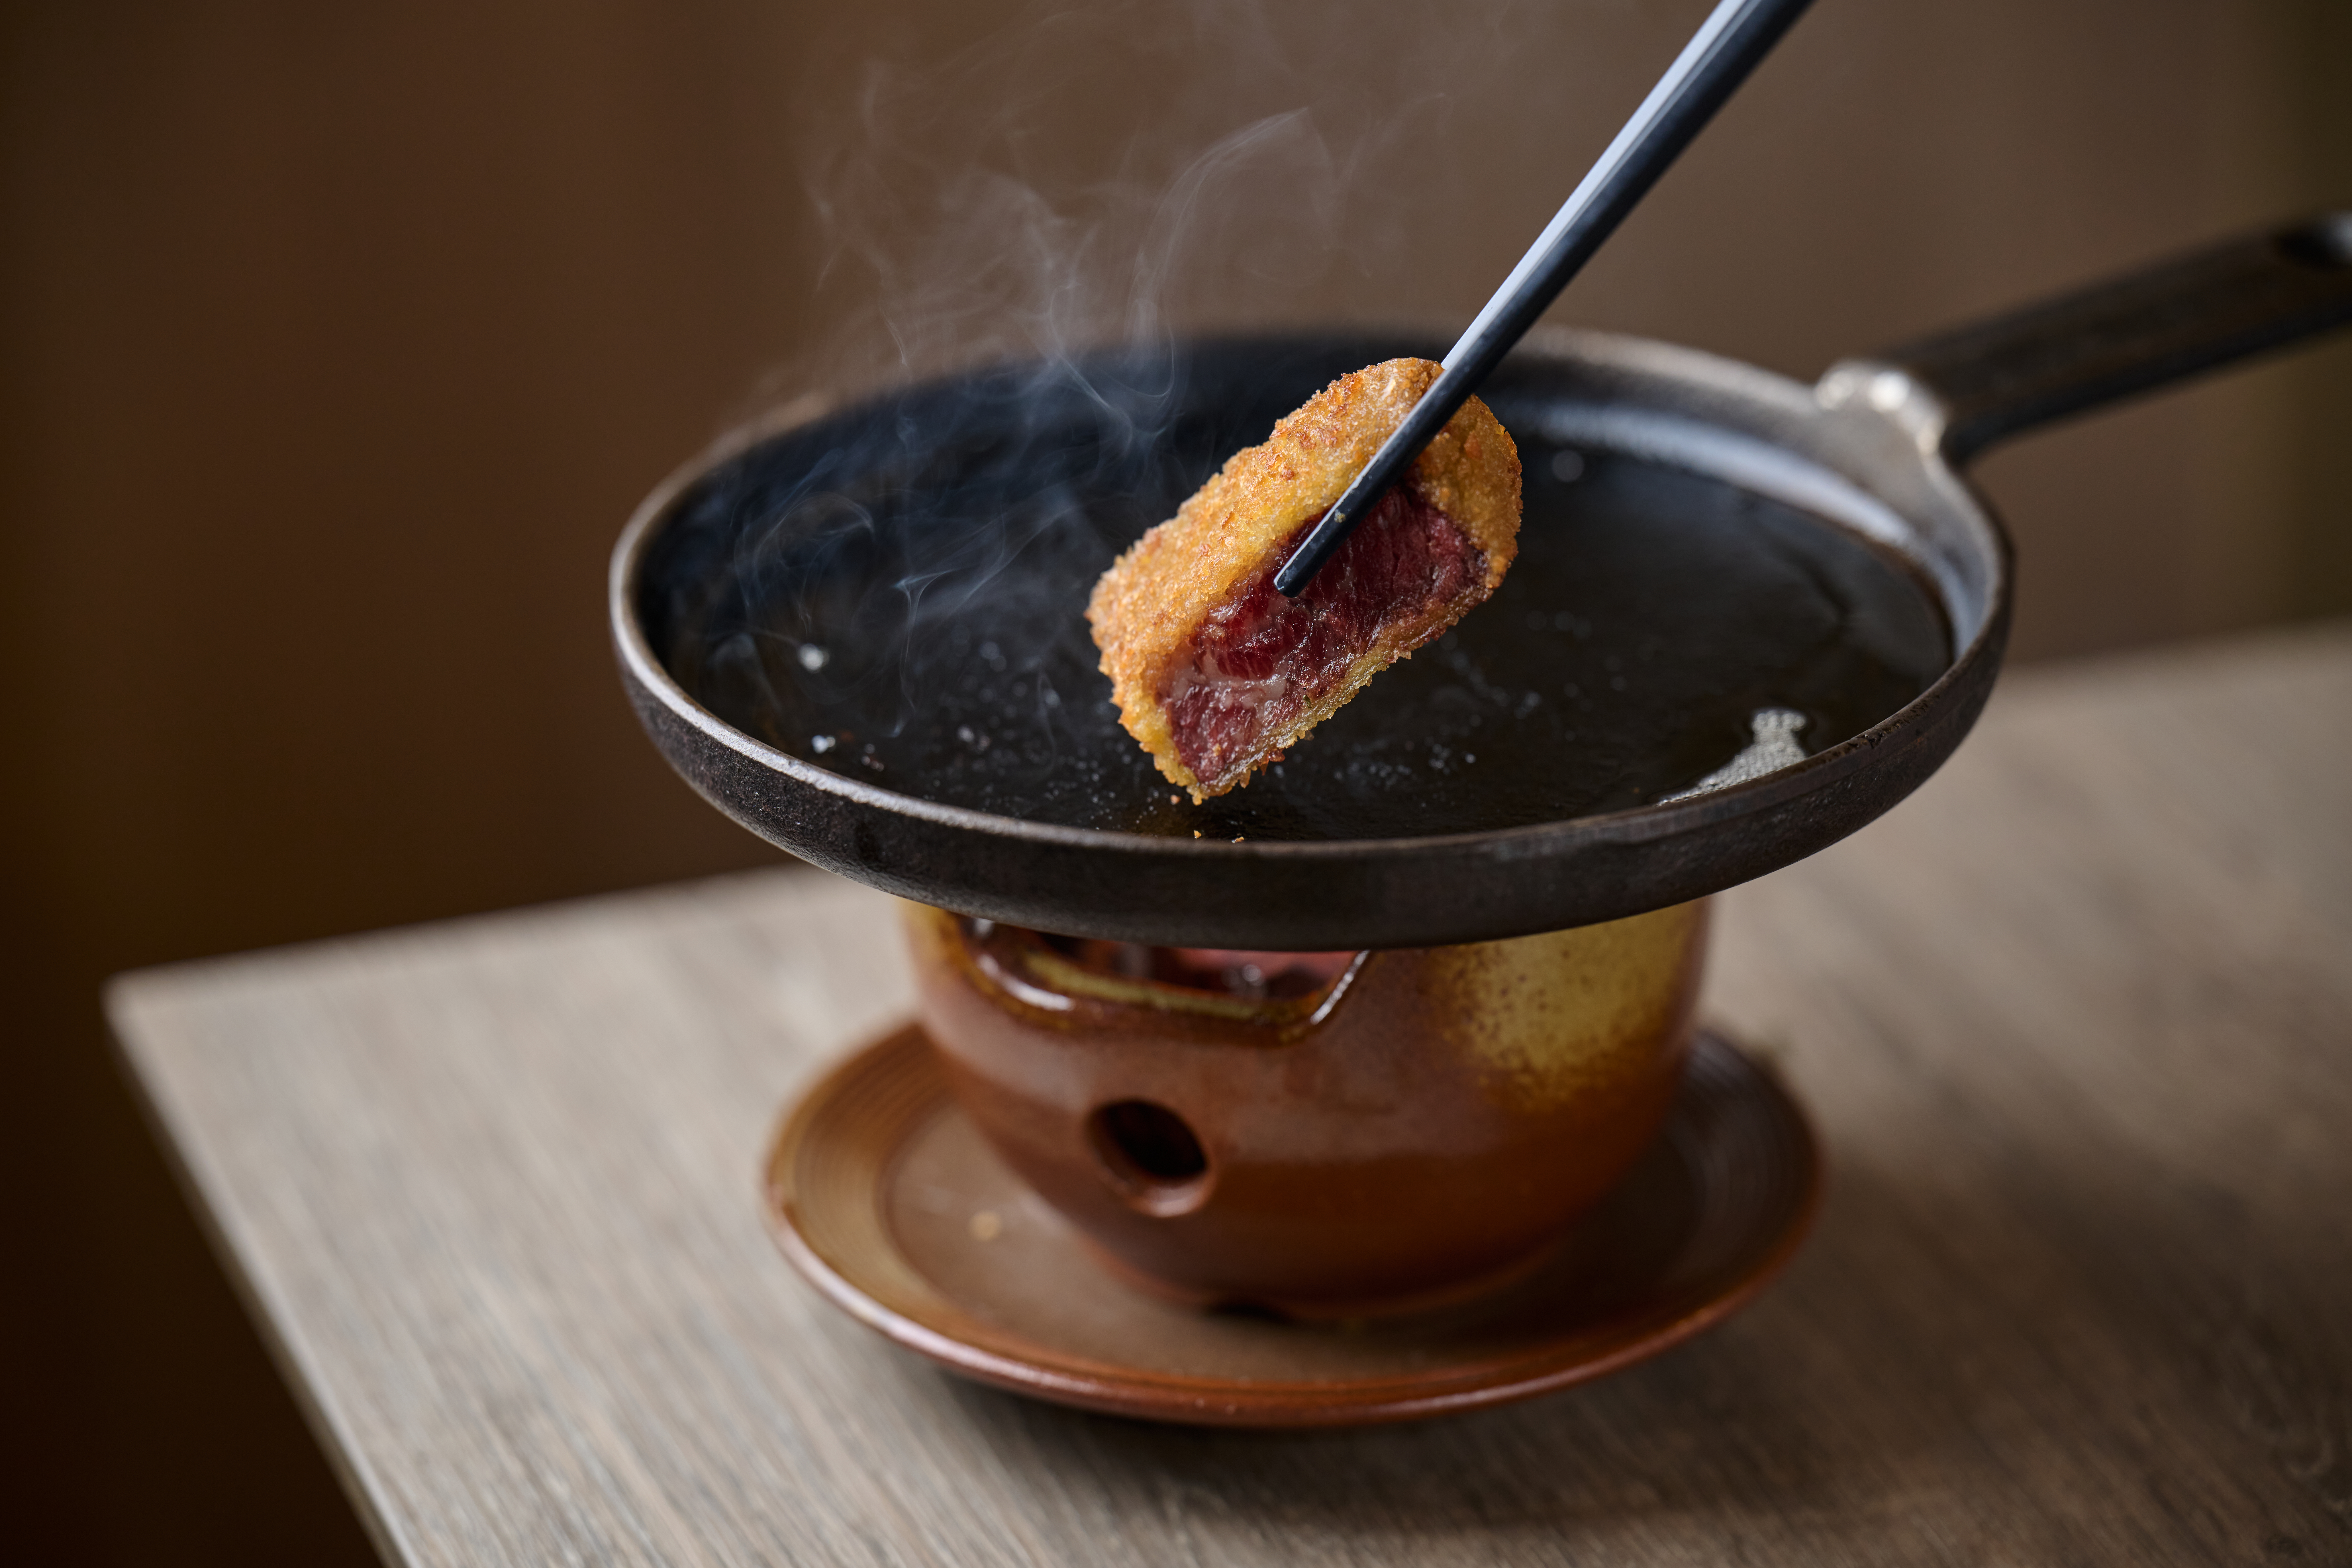 The deep-fried steak at Kyoto Katsygyu